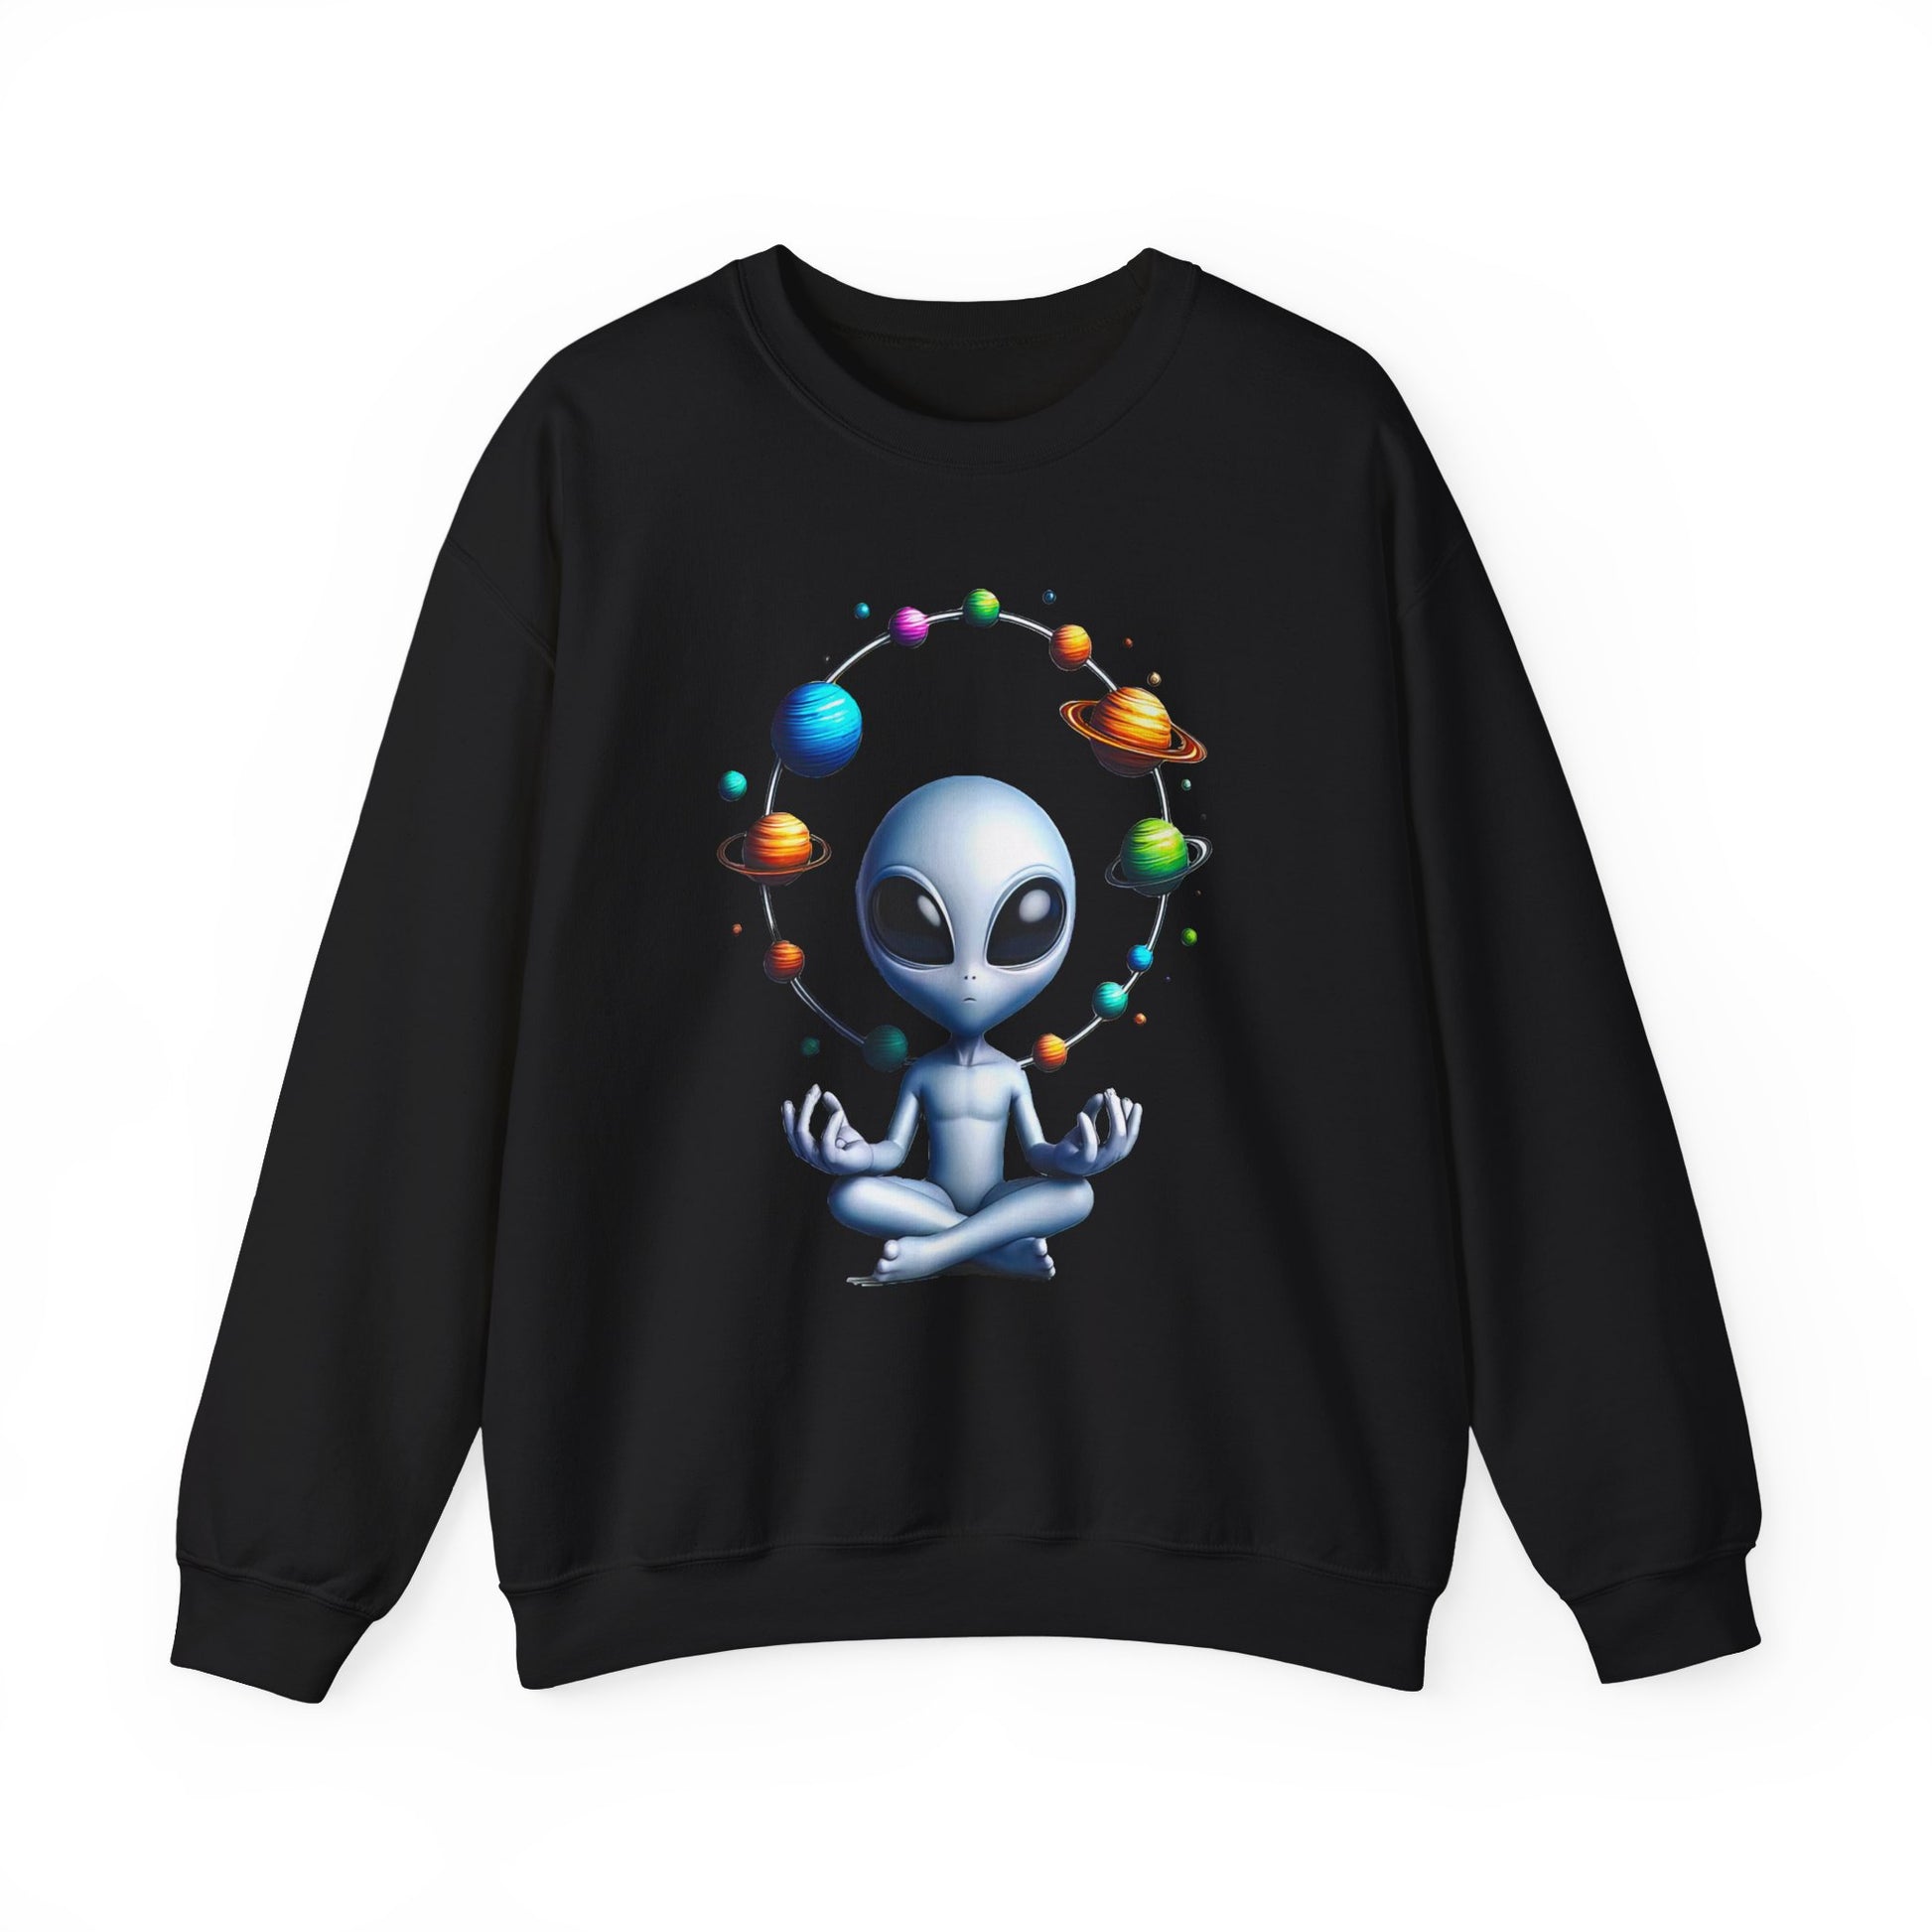 Generation Mood's Meditation in the Cosmos: Alien Sweatshirt , Find Your Zen Among the Planets Sweatshirt.